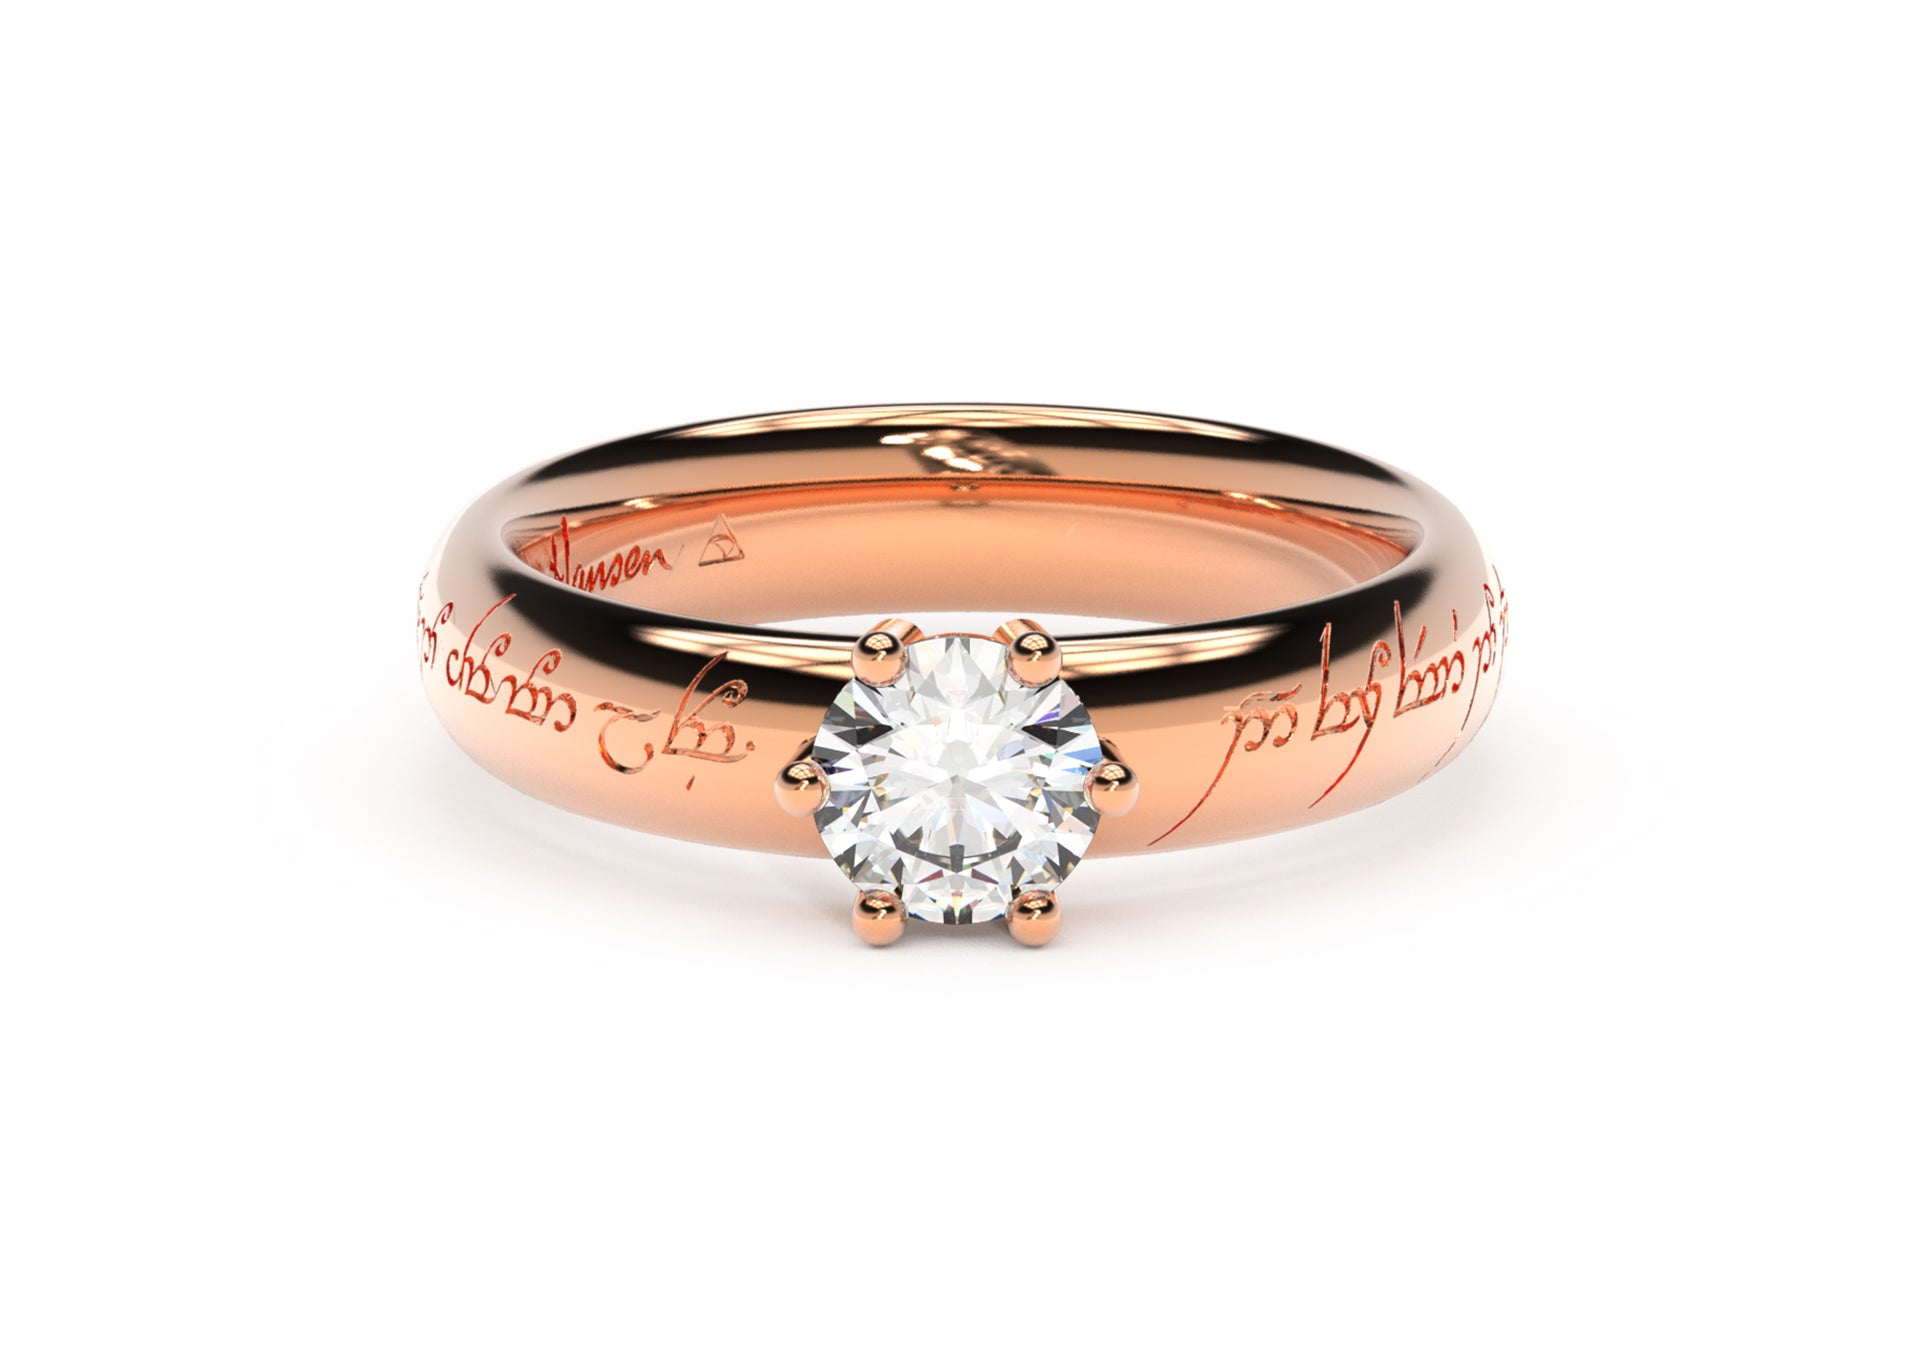 Diamond Wedding Rings: 41 Rings For Real Women